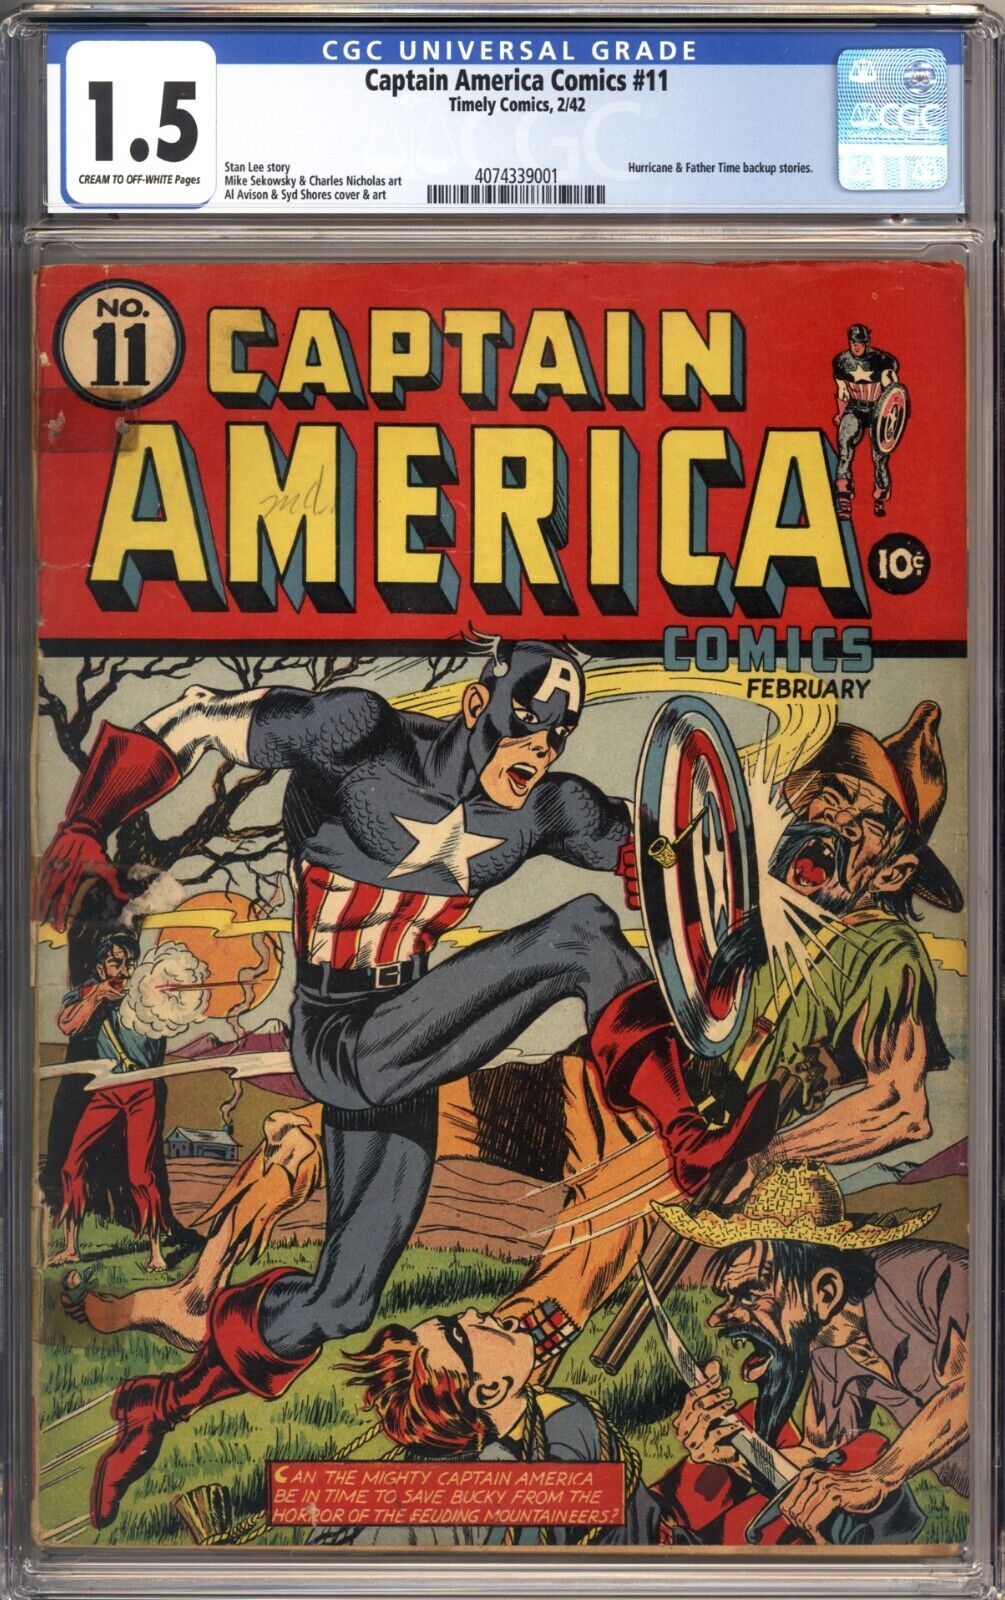 Captain America Comics 11 CGC 15 1942 Vol 1 Rare Hurricane Father Time Backups